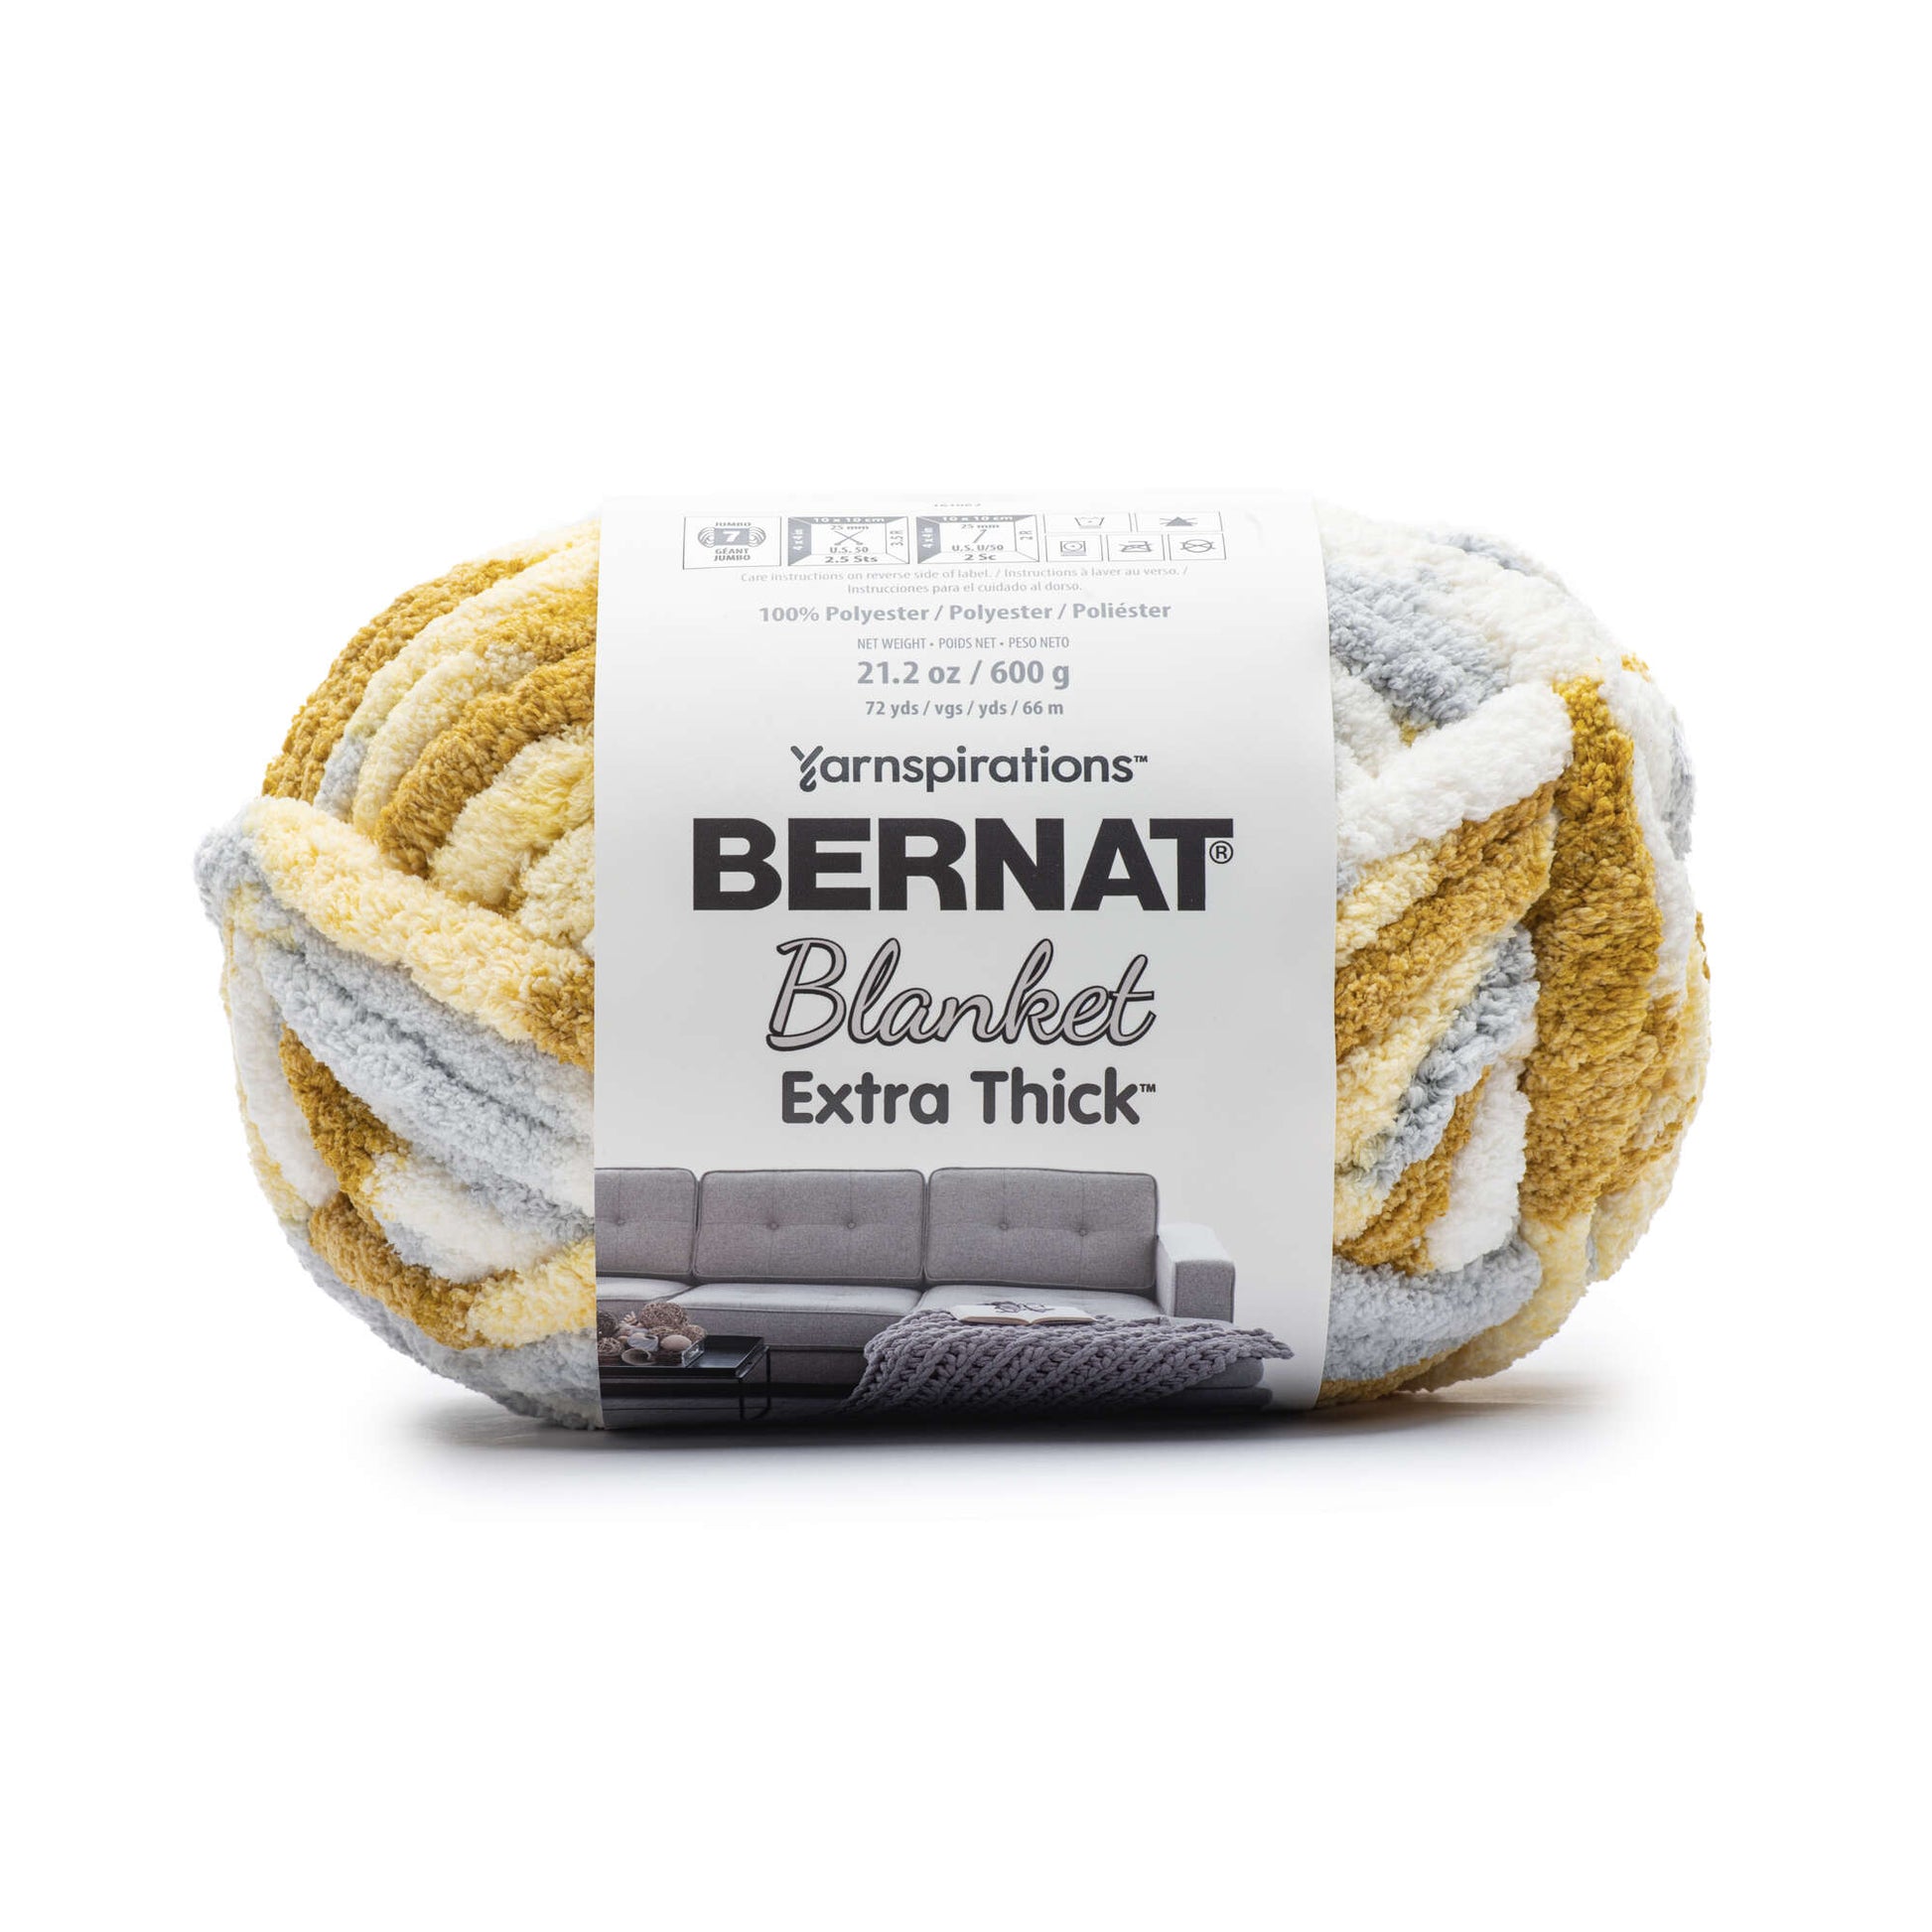 Bernat Blanket Extra Thick Yarn (600g/21.2oz) Dandelion Varg